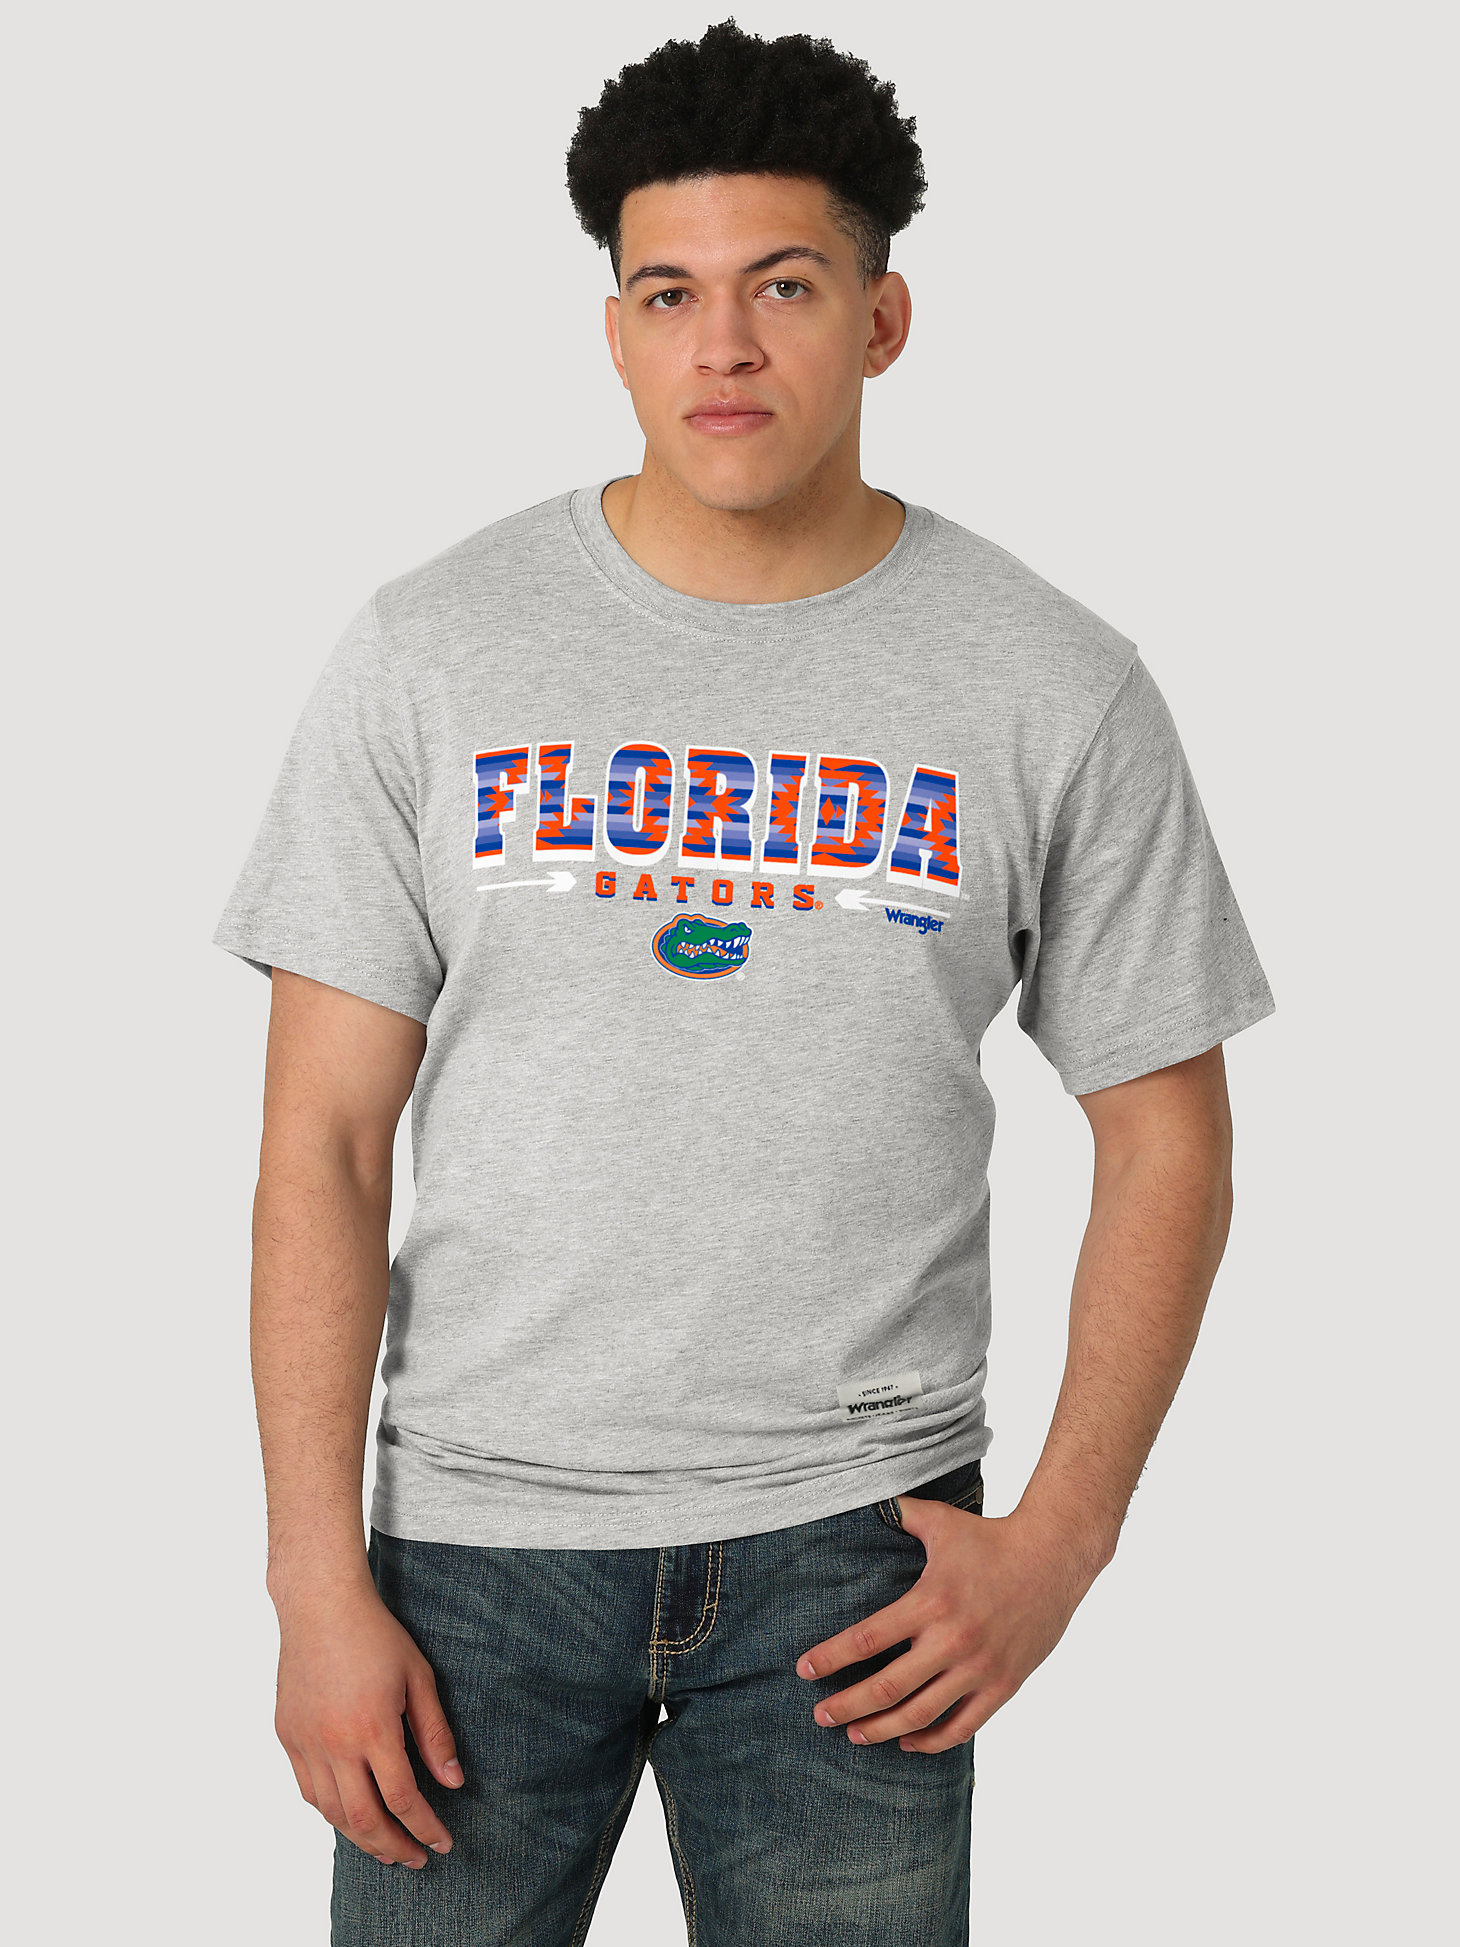 Wrangler Collegiate Sunset Printed Short Sleeve T-Shirt in University of Florida main view